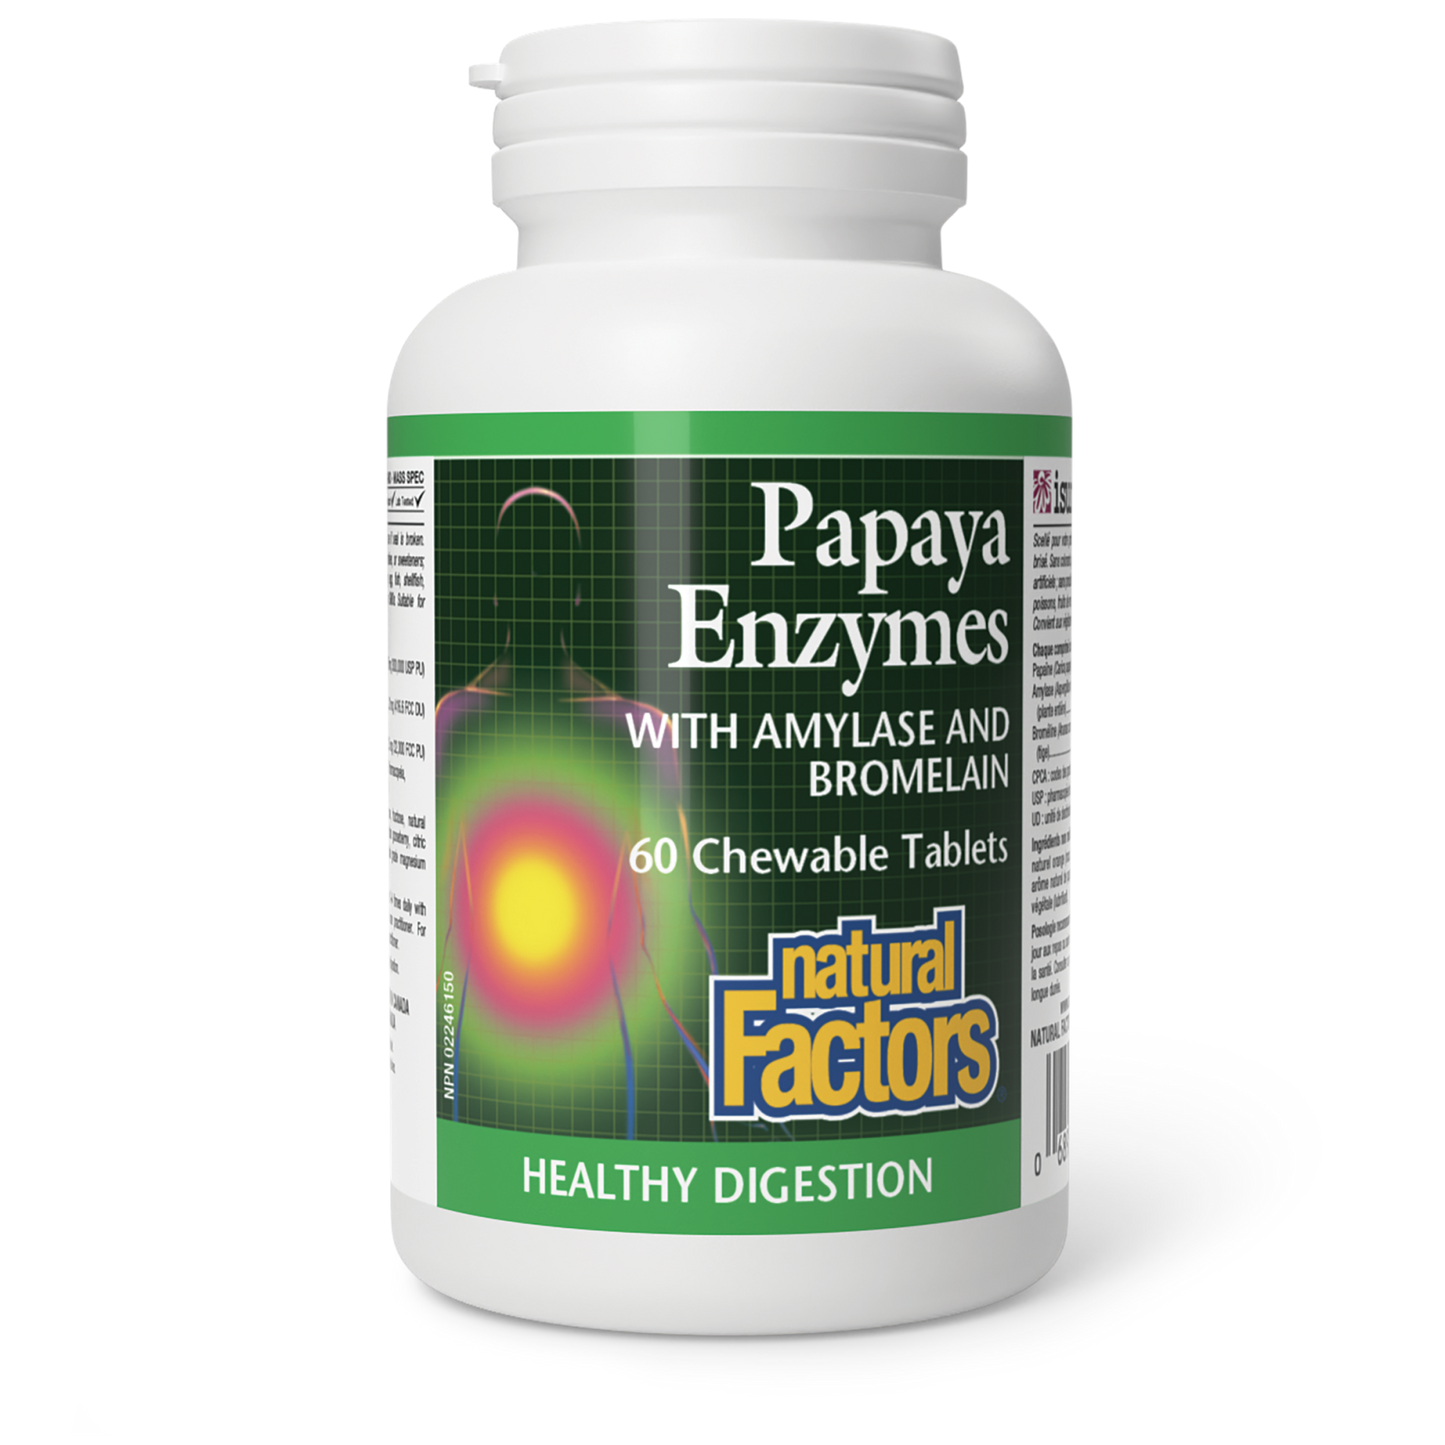 Papaya Enzymes with Amylase and Bromelain, Natural Factors|v|image|1748